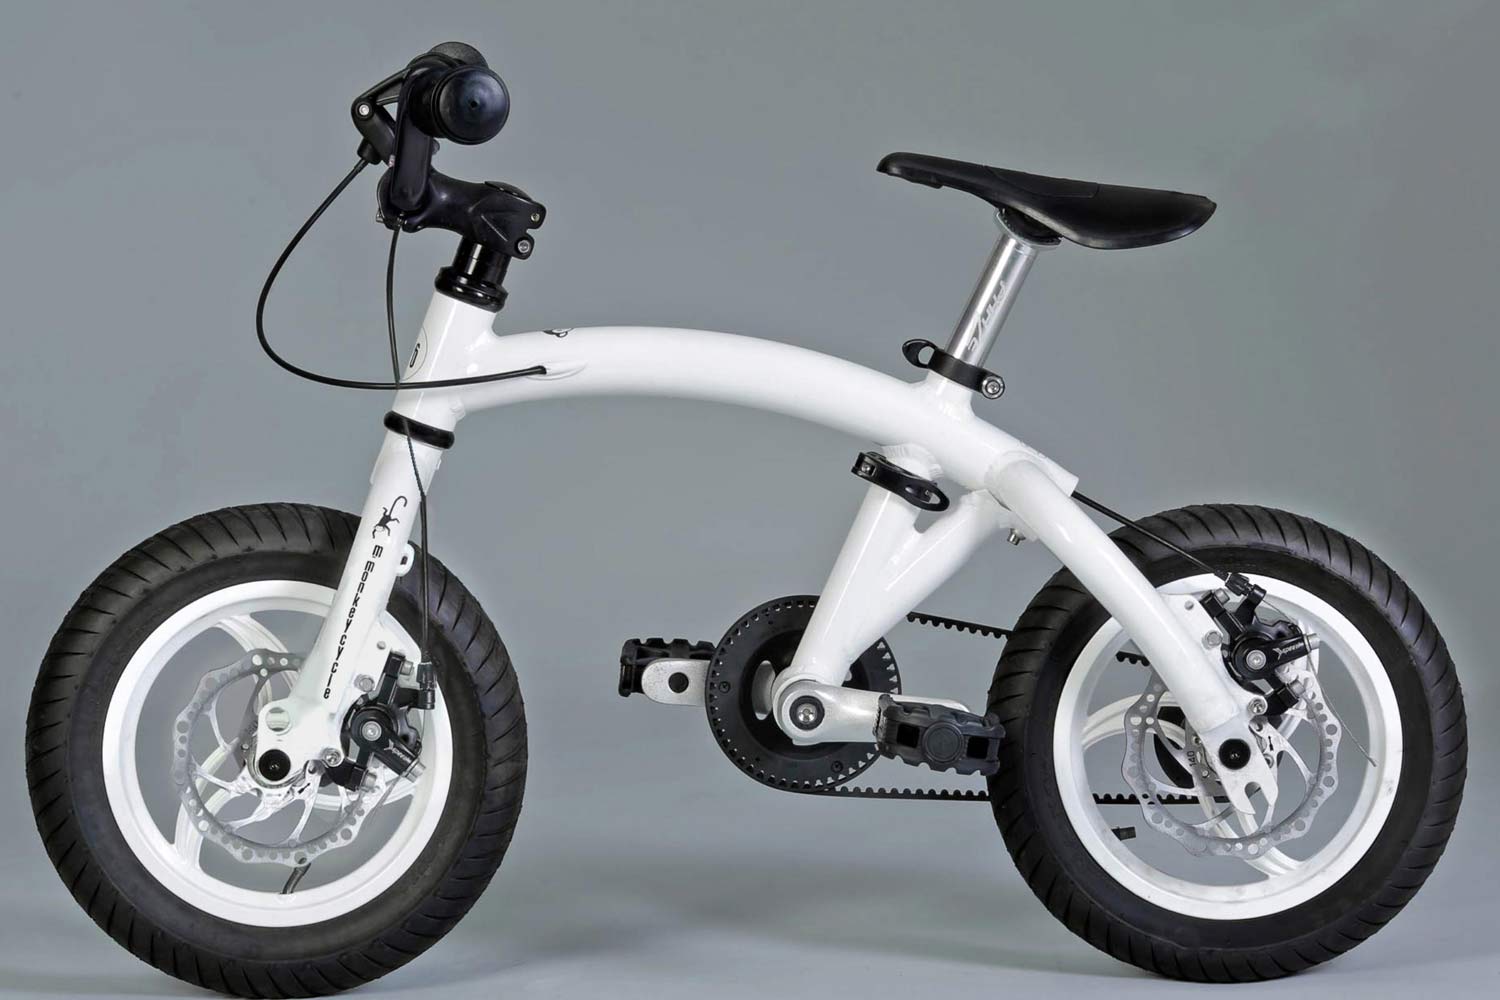 MonkeyCycle adjustable kid's bike, 8-in-1 children's bike that grows from balance bike to pedal bike